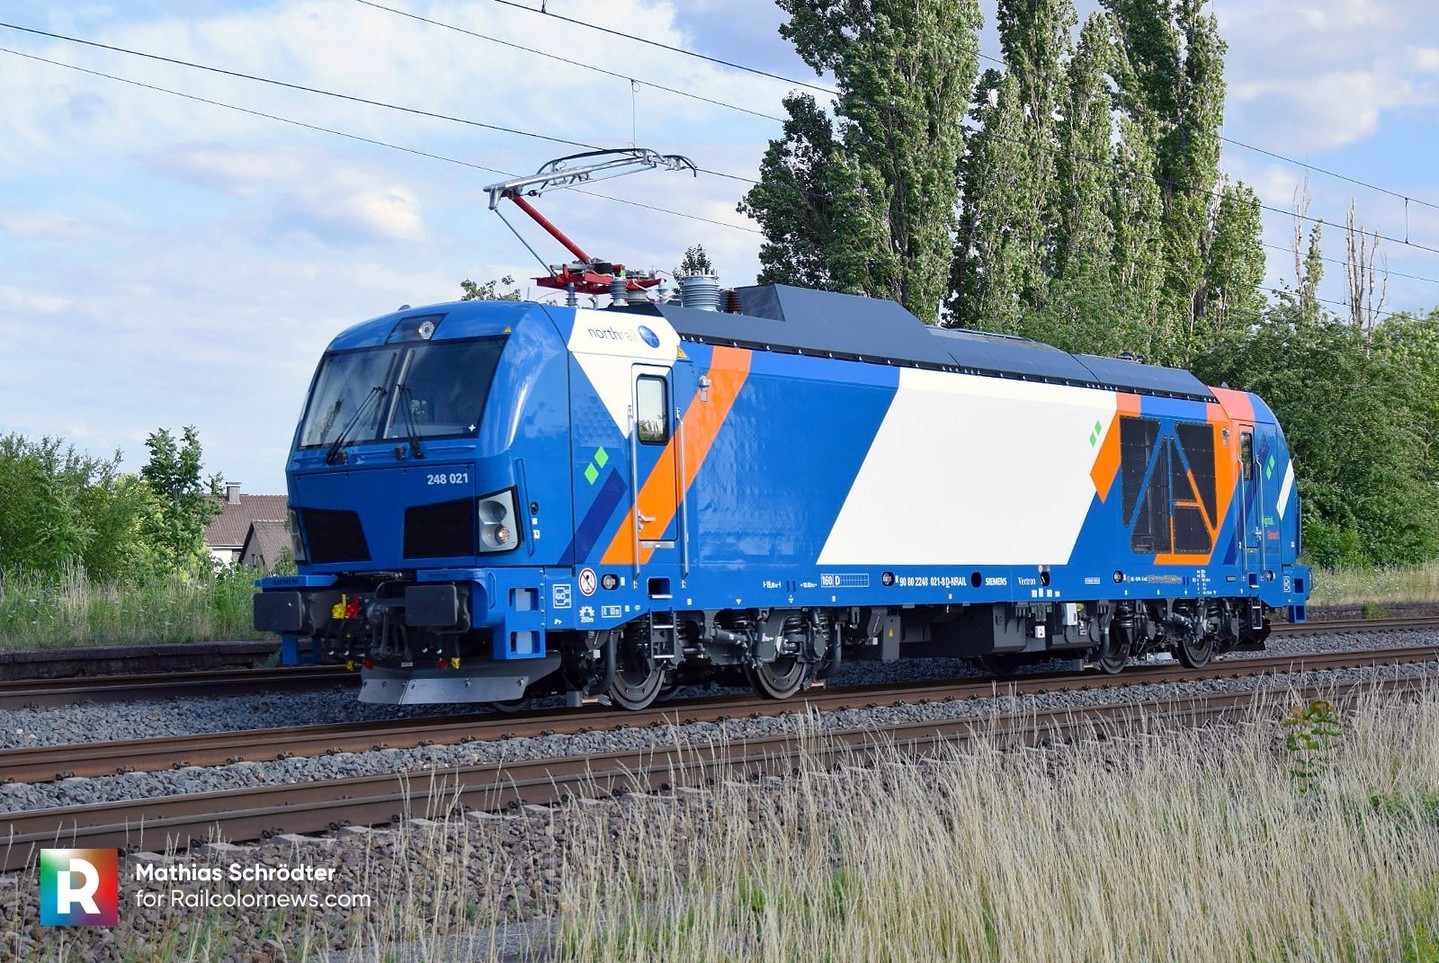 📷 by Mathias Schrödter 🇩🇪 Northrail Vectron Dual Mode with Rheincargo stickers ⬆️
.
.
.
.
#siemens #vectron #siemensvectrondualmode #siemens_mobility #vectrondualmode #dualmode #new #electriclocomotive #railways #railways_of_europe #railcolornews #ellok #train #locomotive #ellok #br248021 #bahnreihe248 #248021#Paribus #Northrail #duallocomotive #eisenbahn #zug #paribusnorthrail #nrail